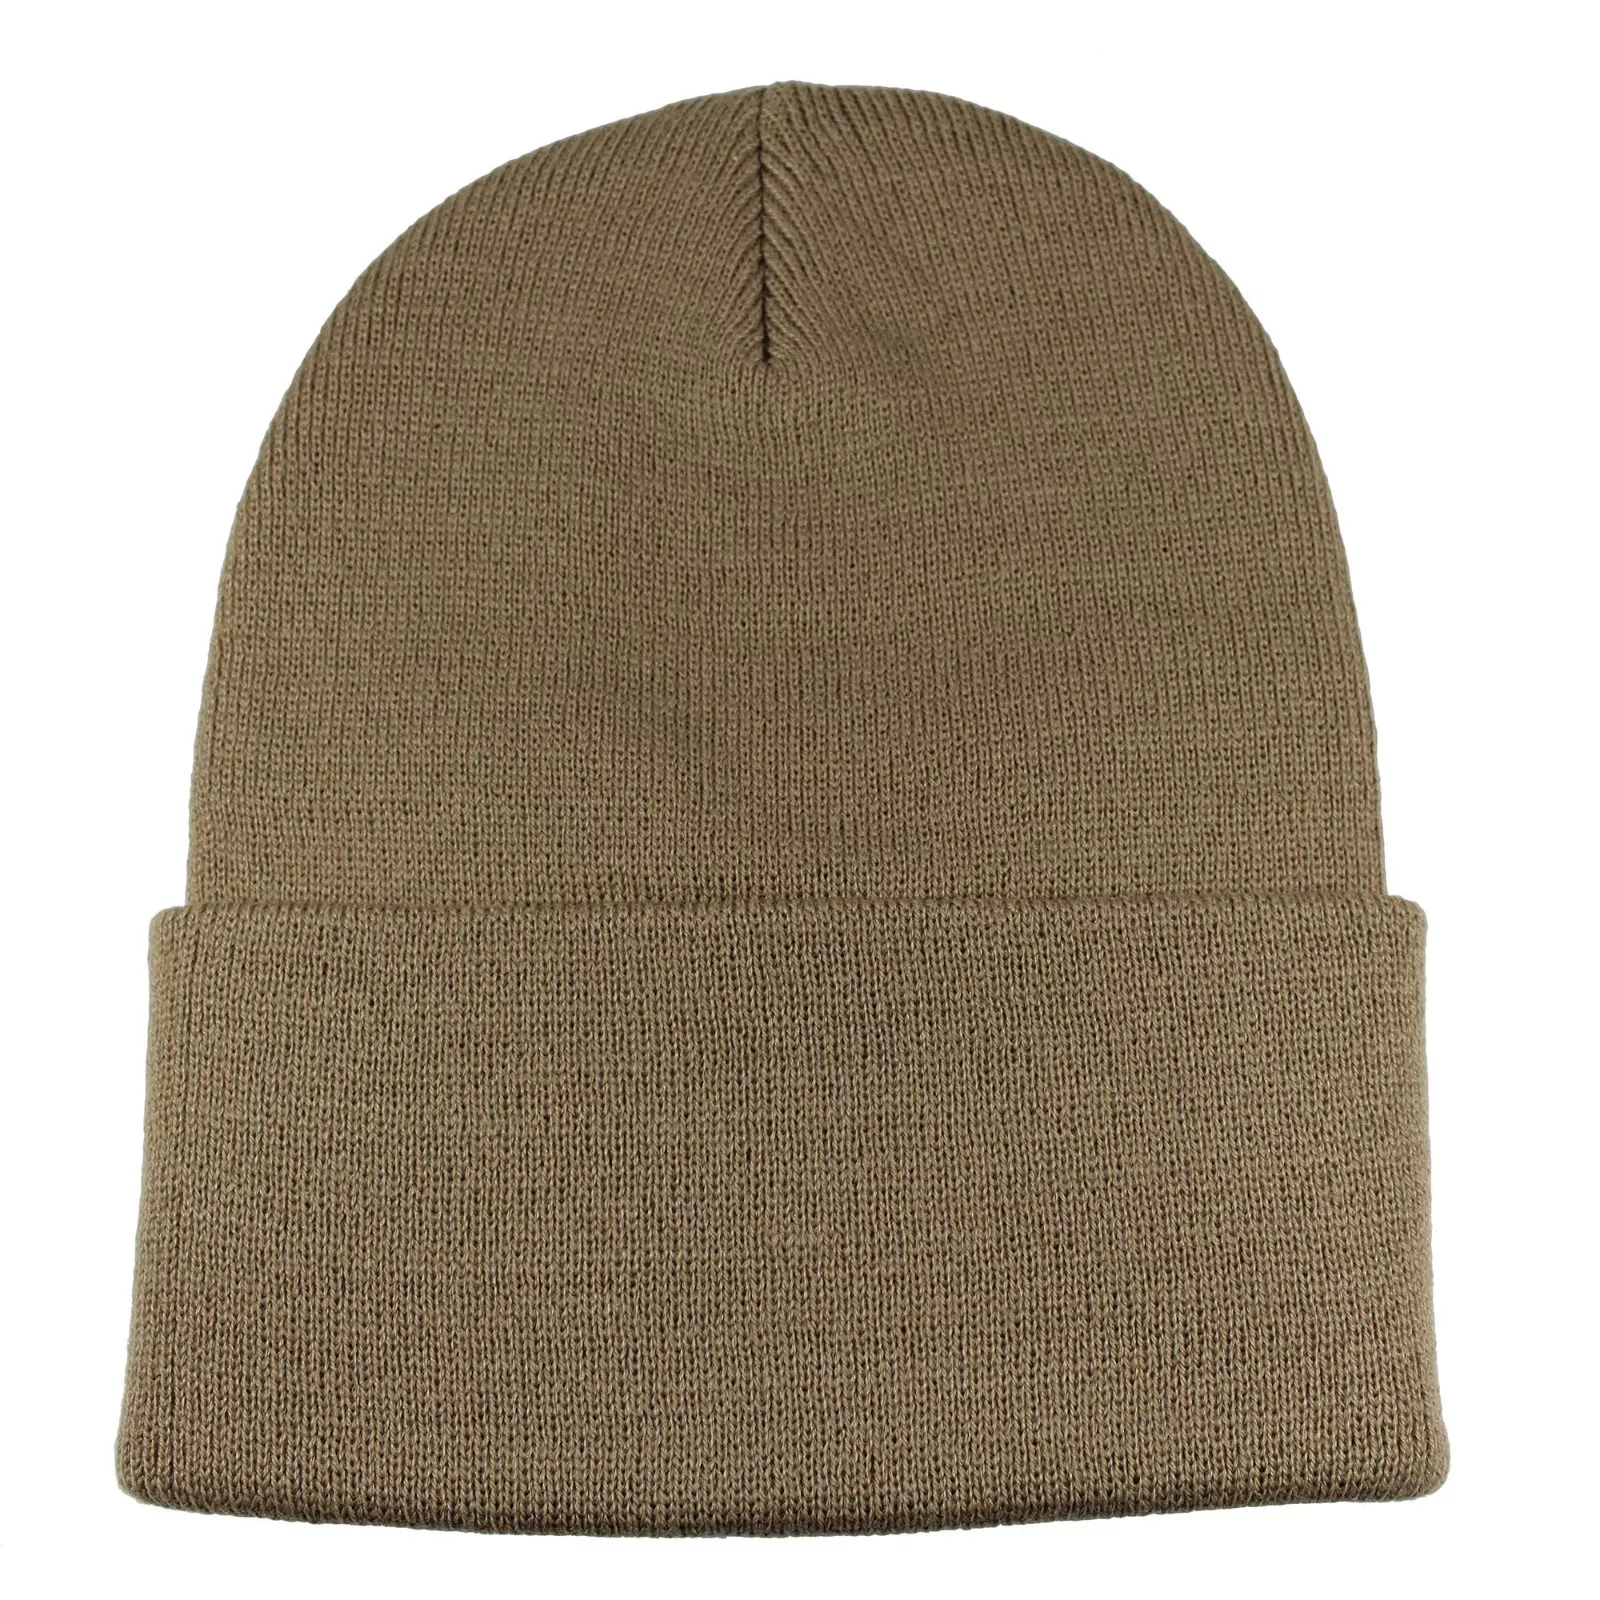 Unisex Plain Warm Knit Beanie Hat Cuff Skull Ski Cap Khaki1pcs - £7.97 GBP